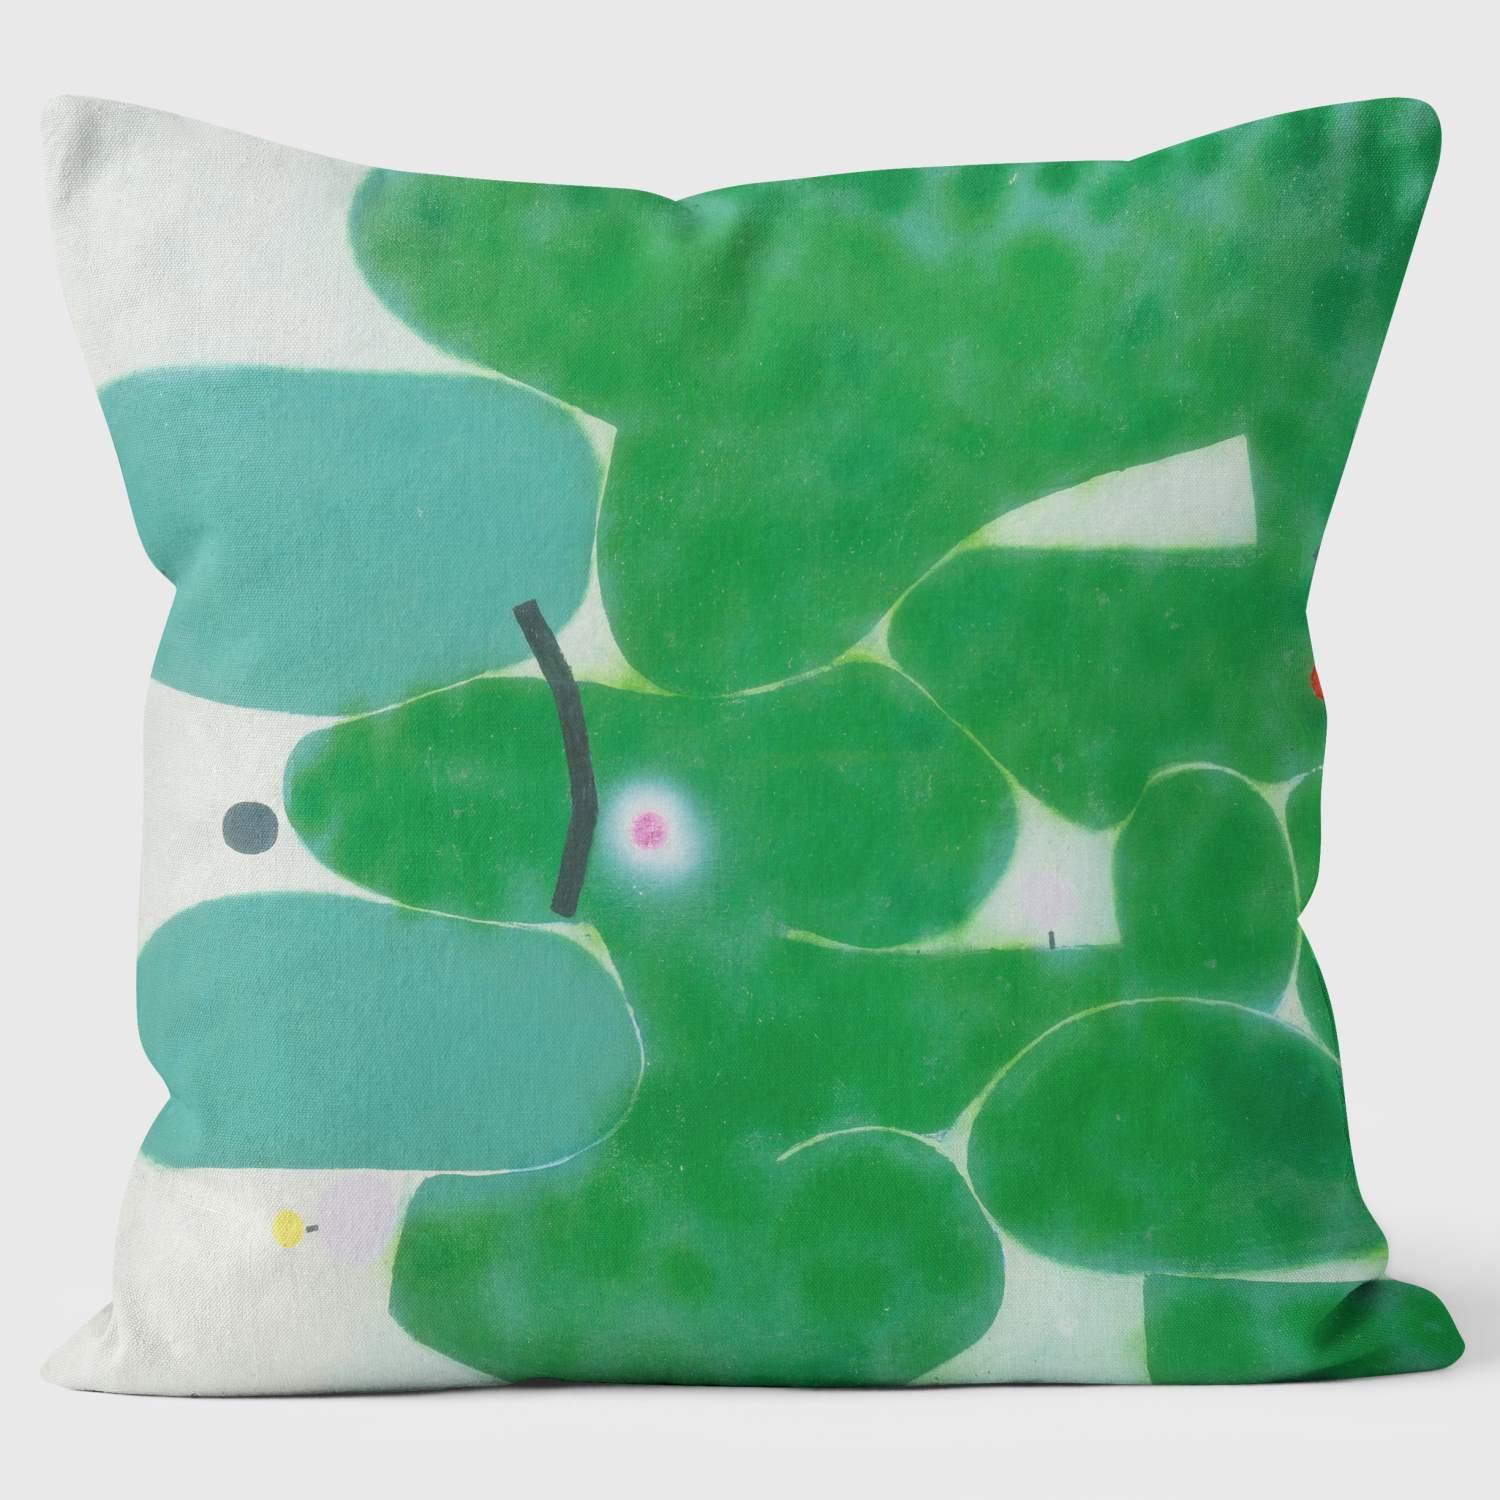 The Green Earth -TATE - Victor Pasmore Cushion - Handmade Cushions UK - WeLoveCushions